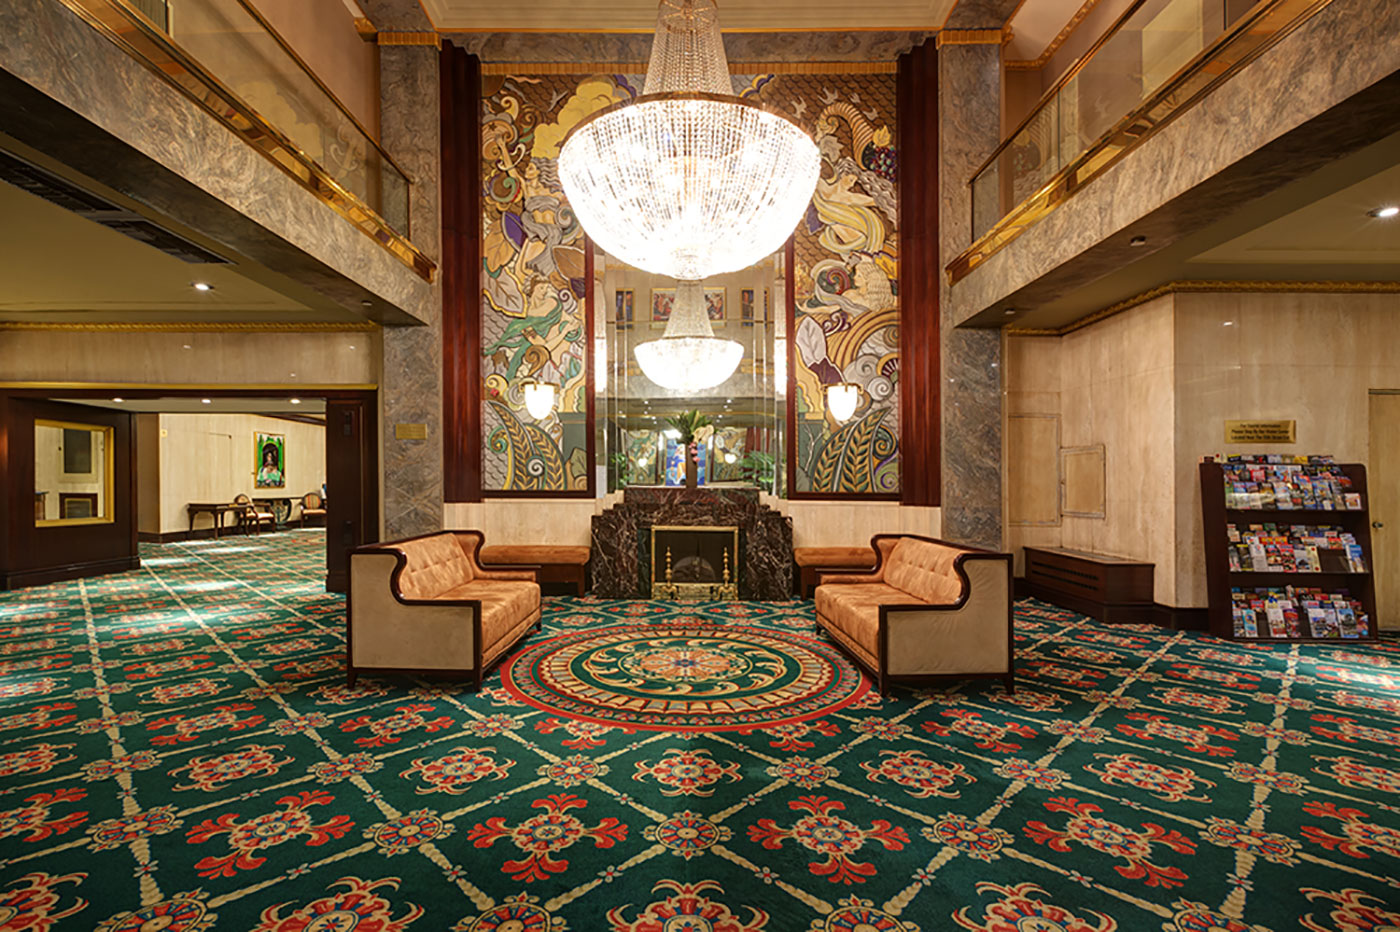 Wellington Hotel - Lobby